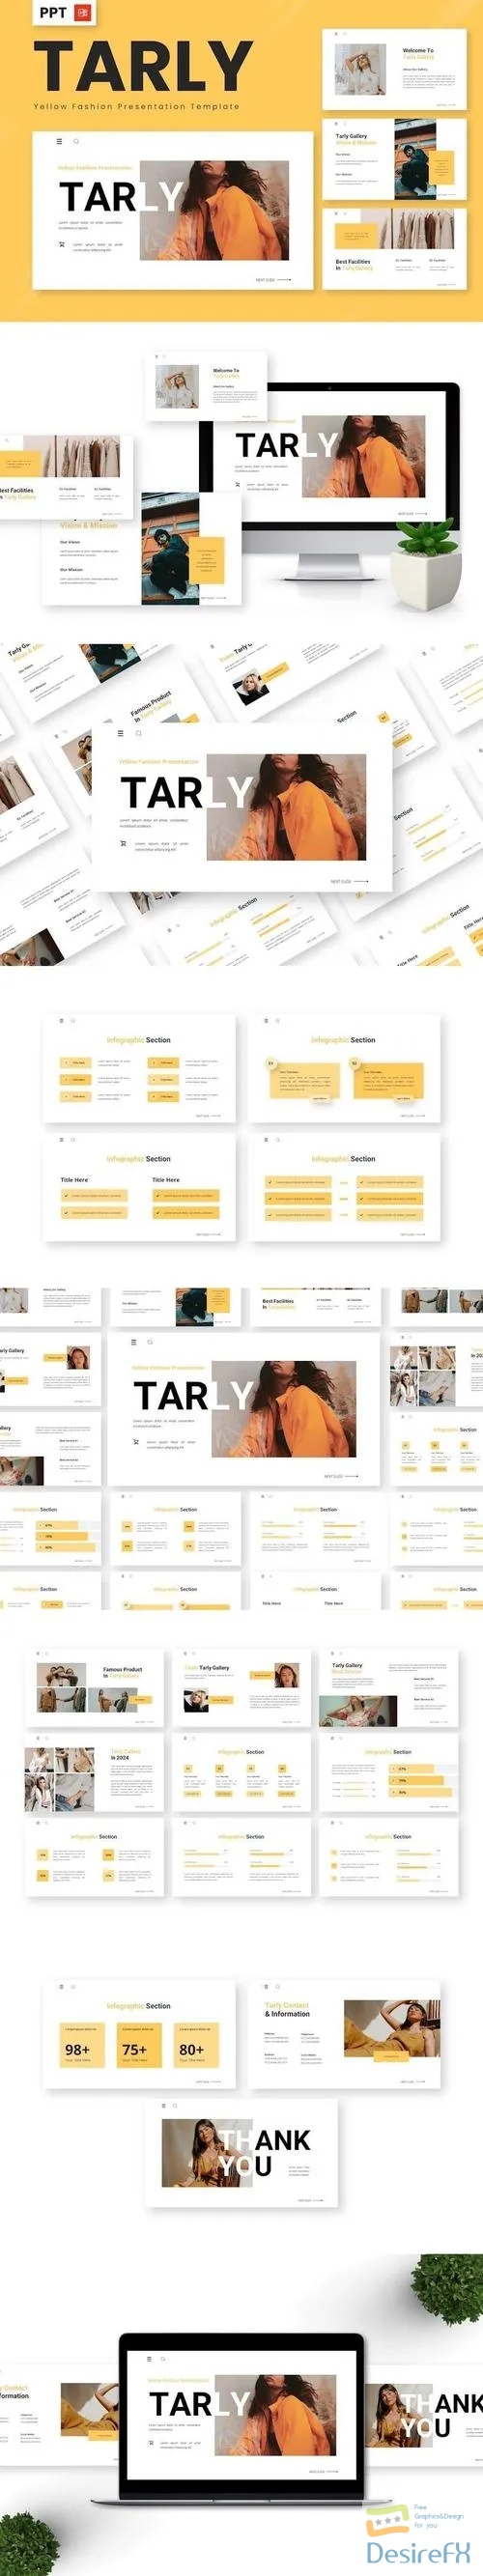 Tarly - Yellow Fashion Powerpoint Templates